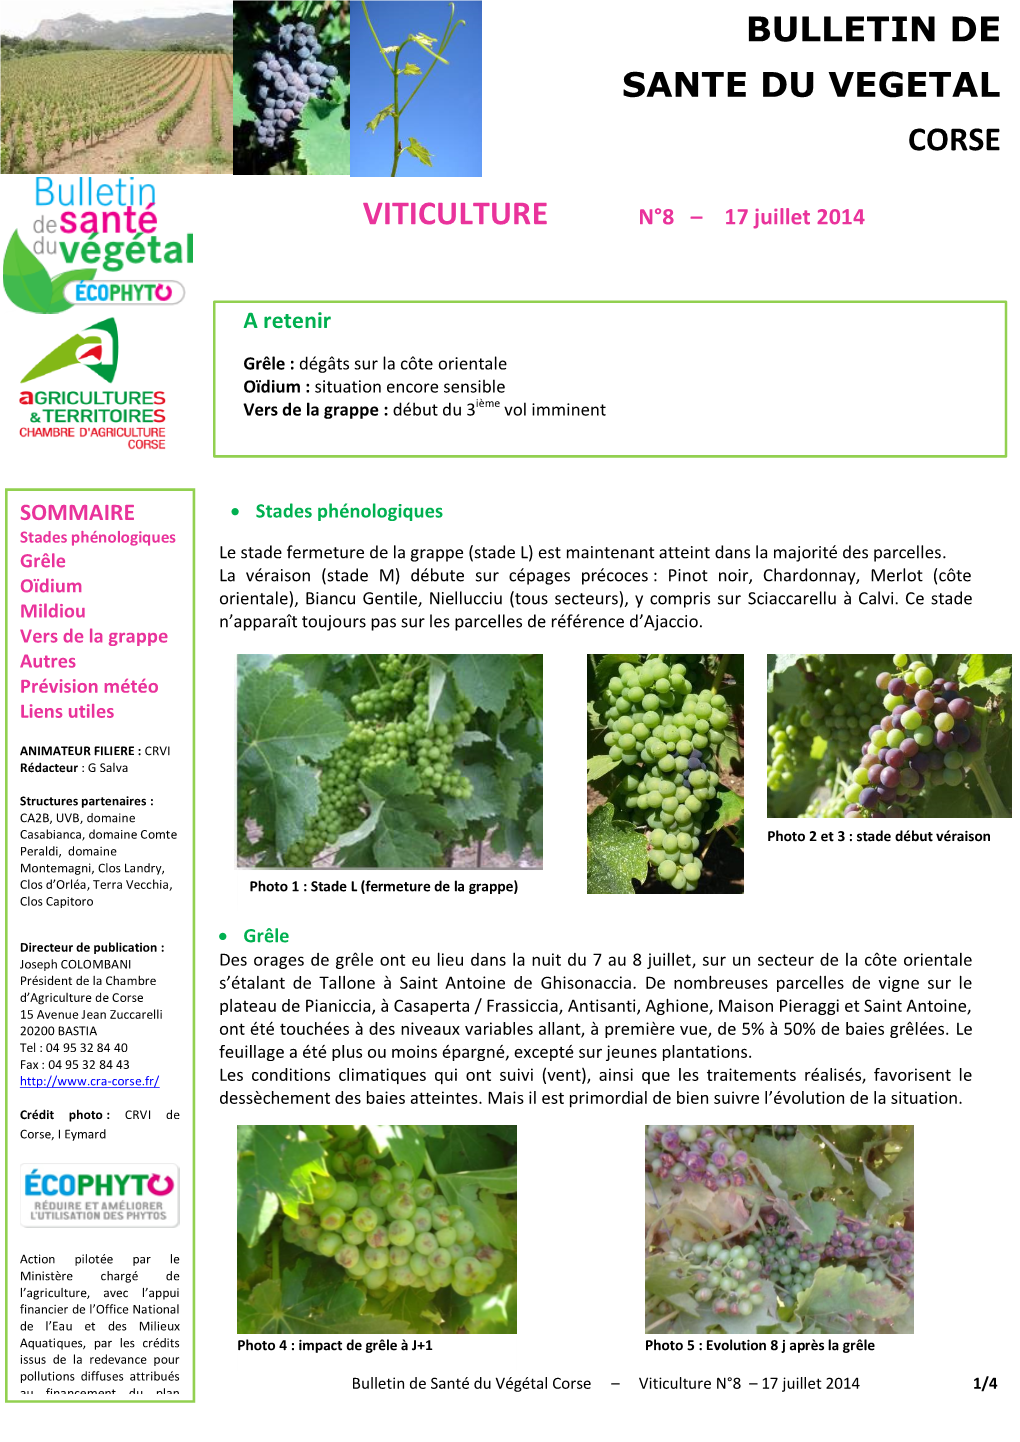 Viticulture Bulletin De Sante Du Vegetal Corse